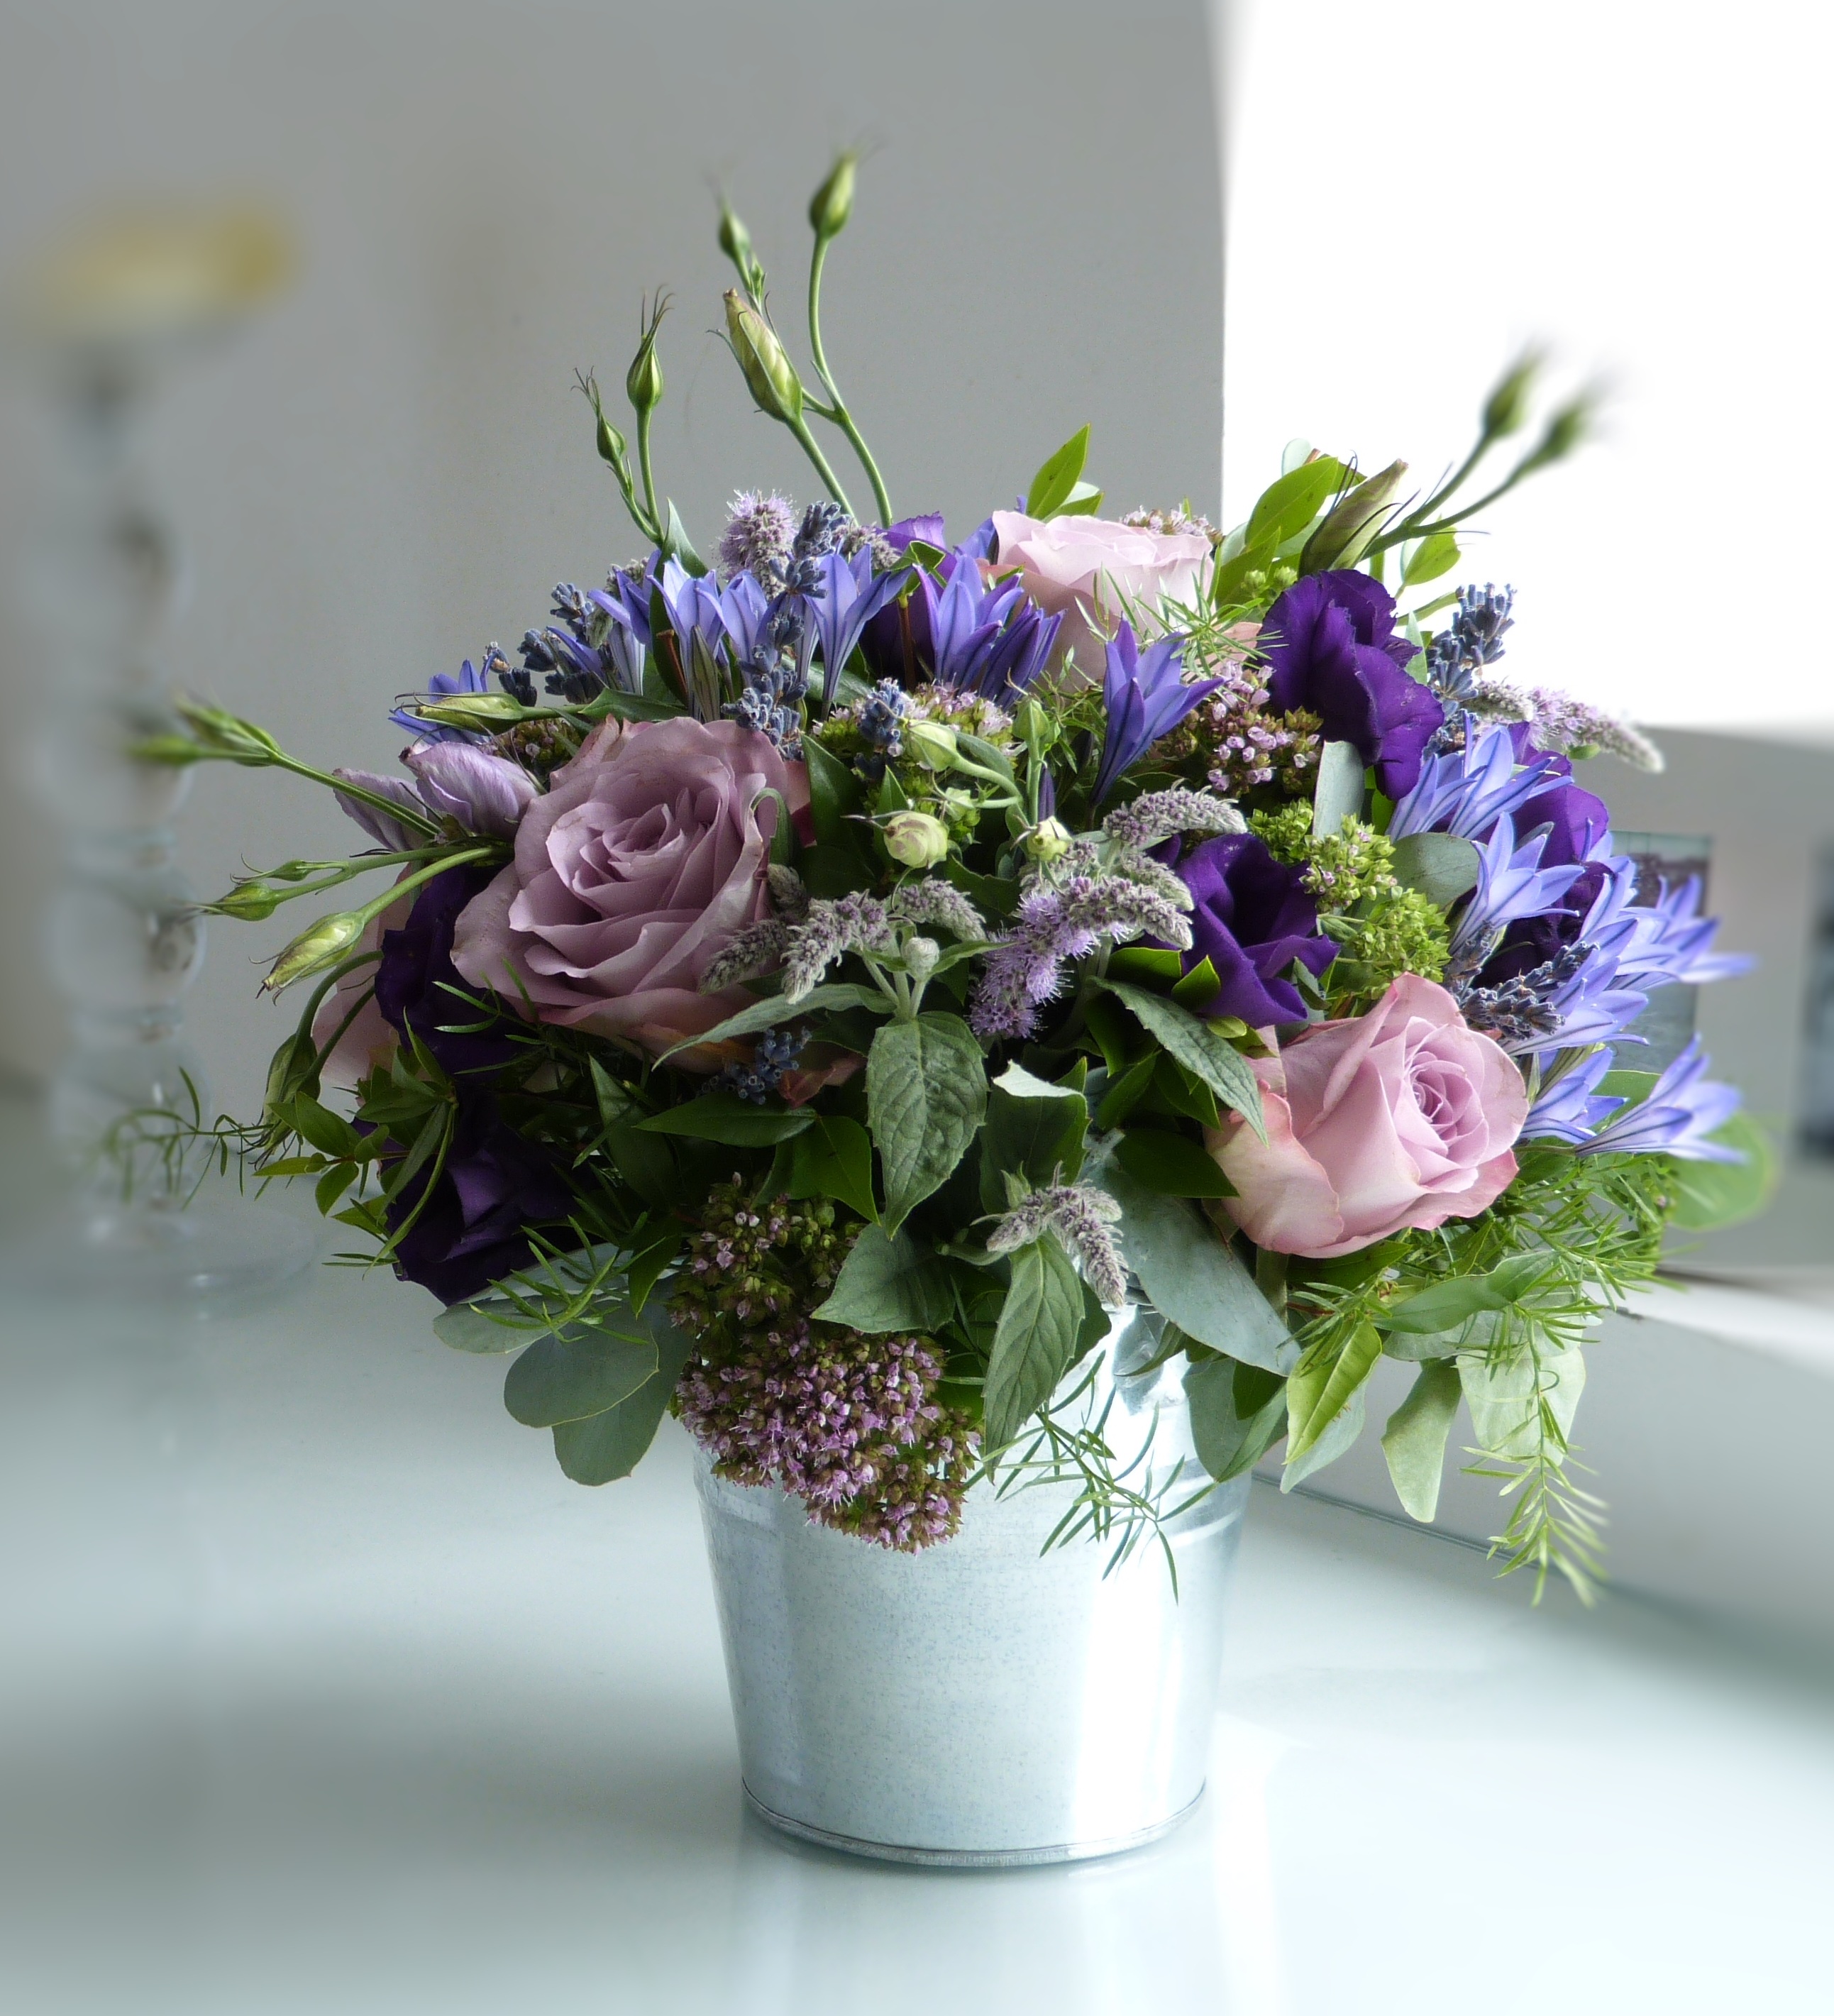 Happy Birthday Flowers: Send Flowers as a Birthday Gift | Flower Studio